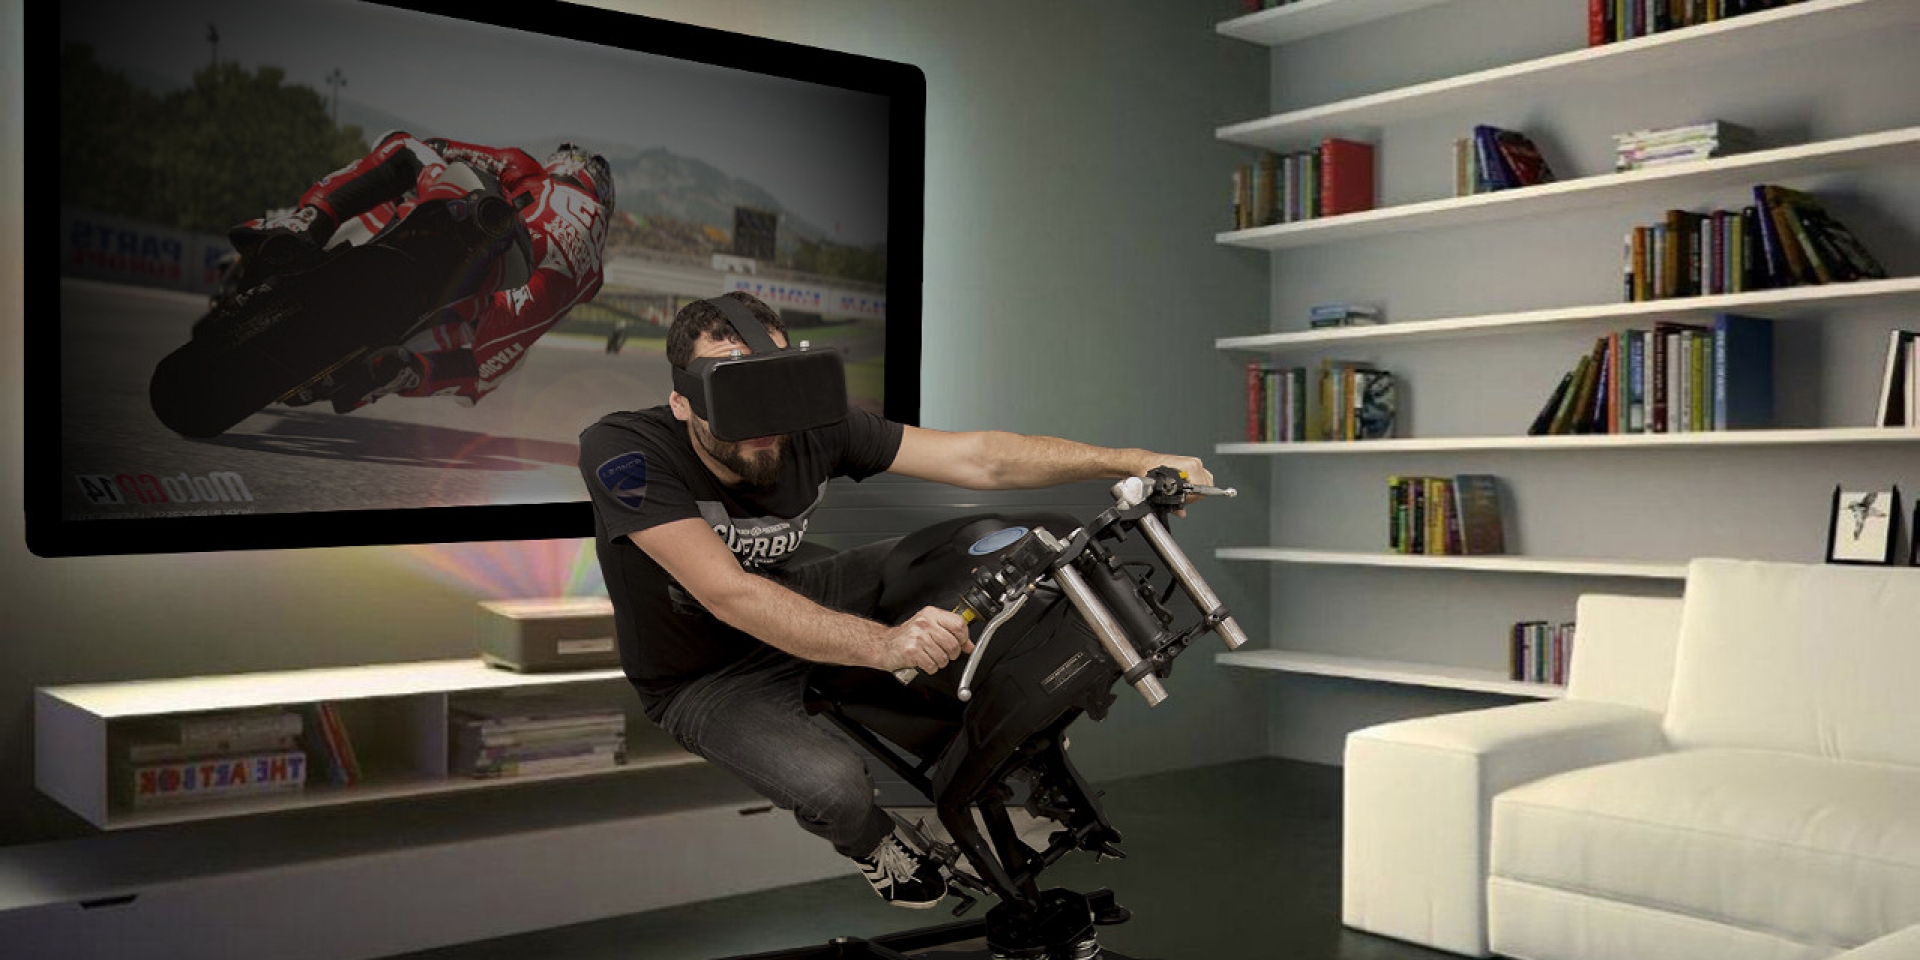 MotoGP在家騎，LeanGP模擬器讓你身歷賽道其境